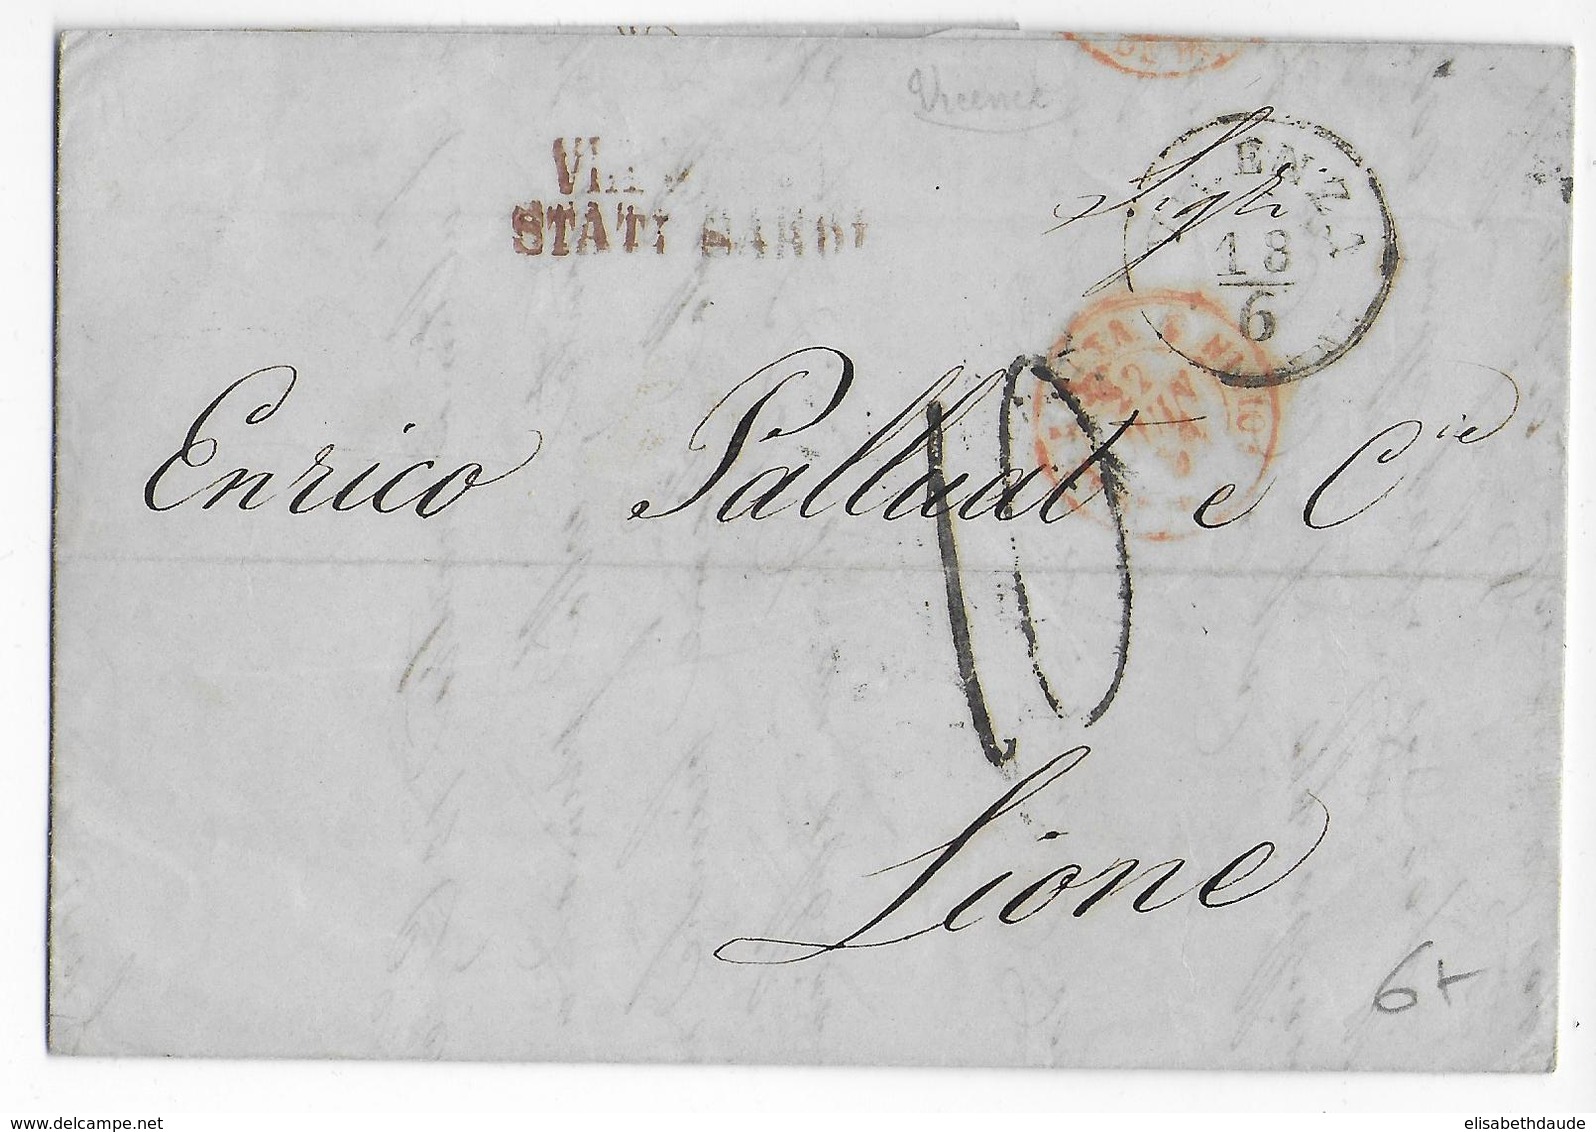 1856 - LETTRE De VICENZA (VENETIE) => LYON Avec MARQUE "VIA STATI SARDI" SARDE - Sardegna